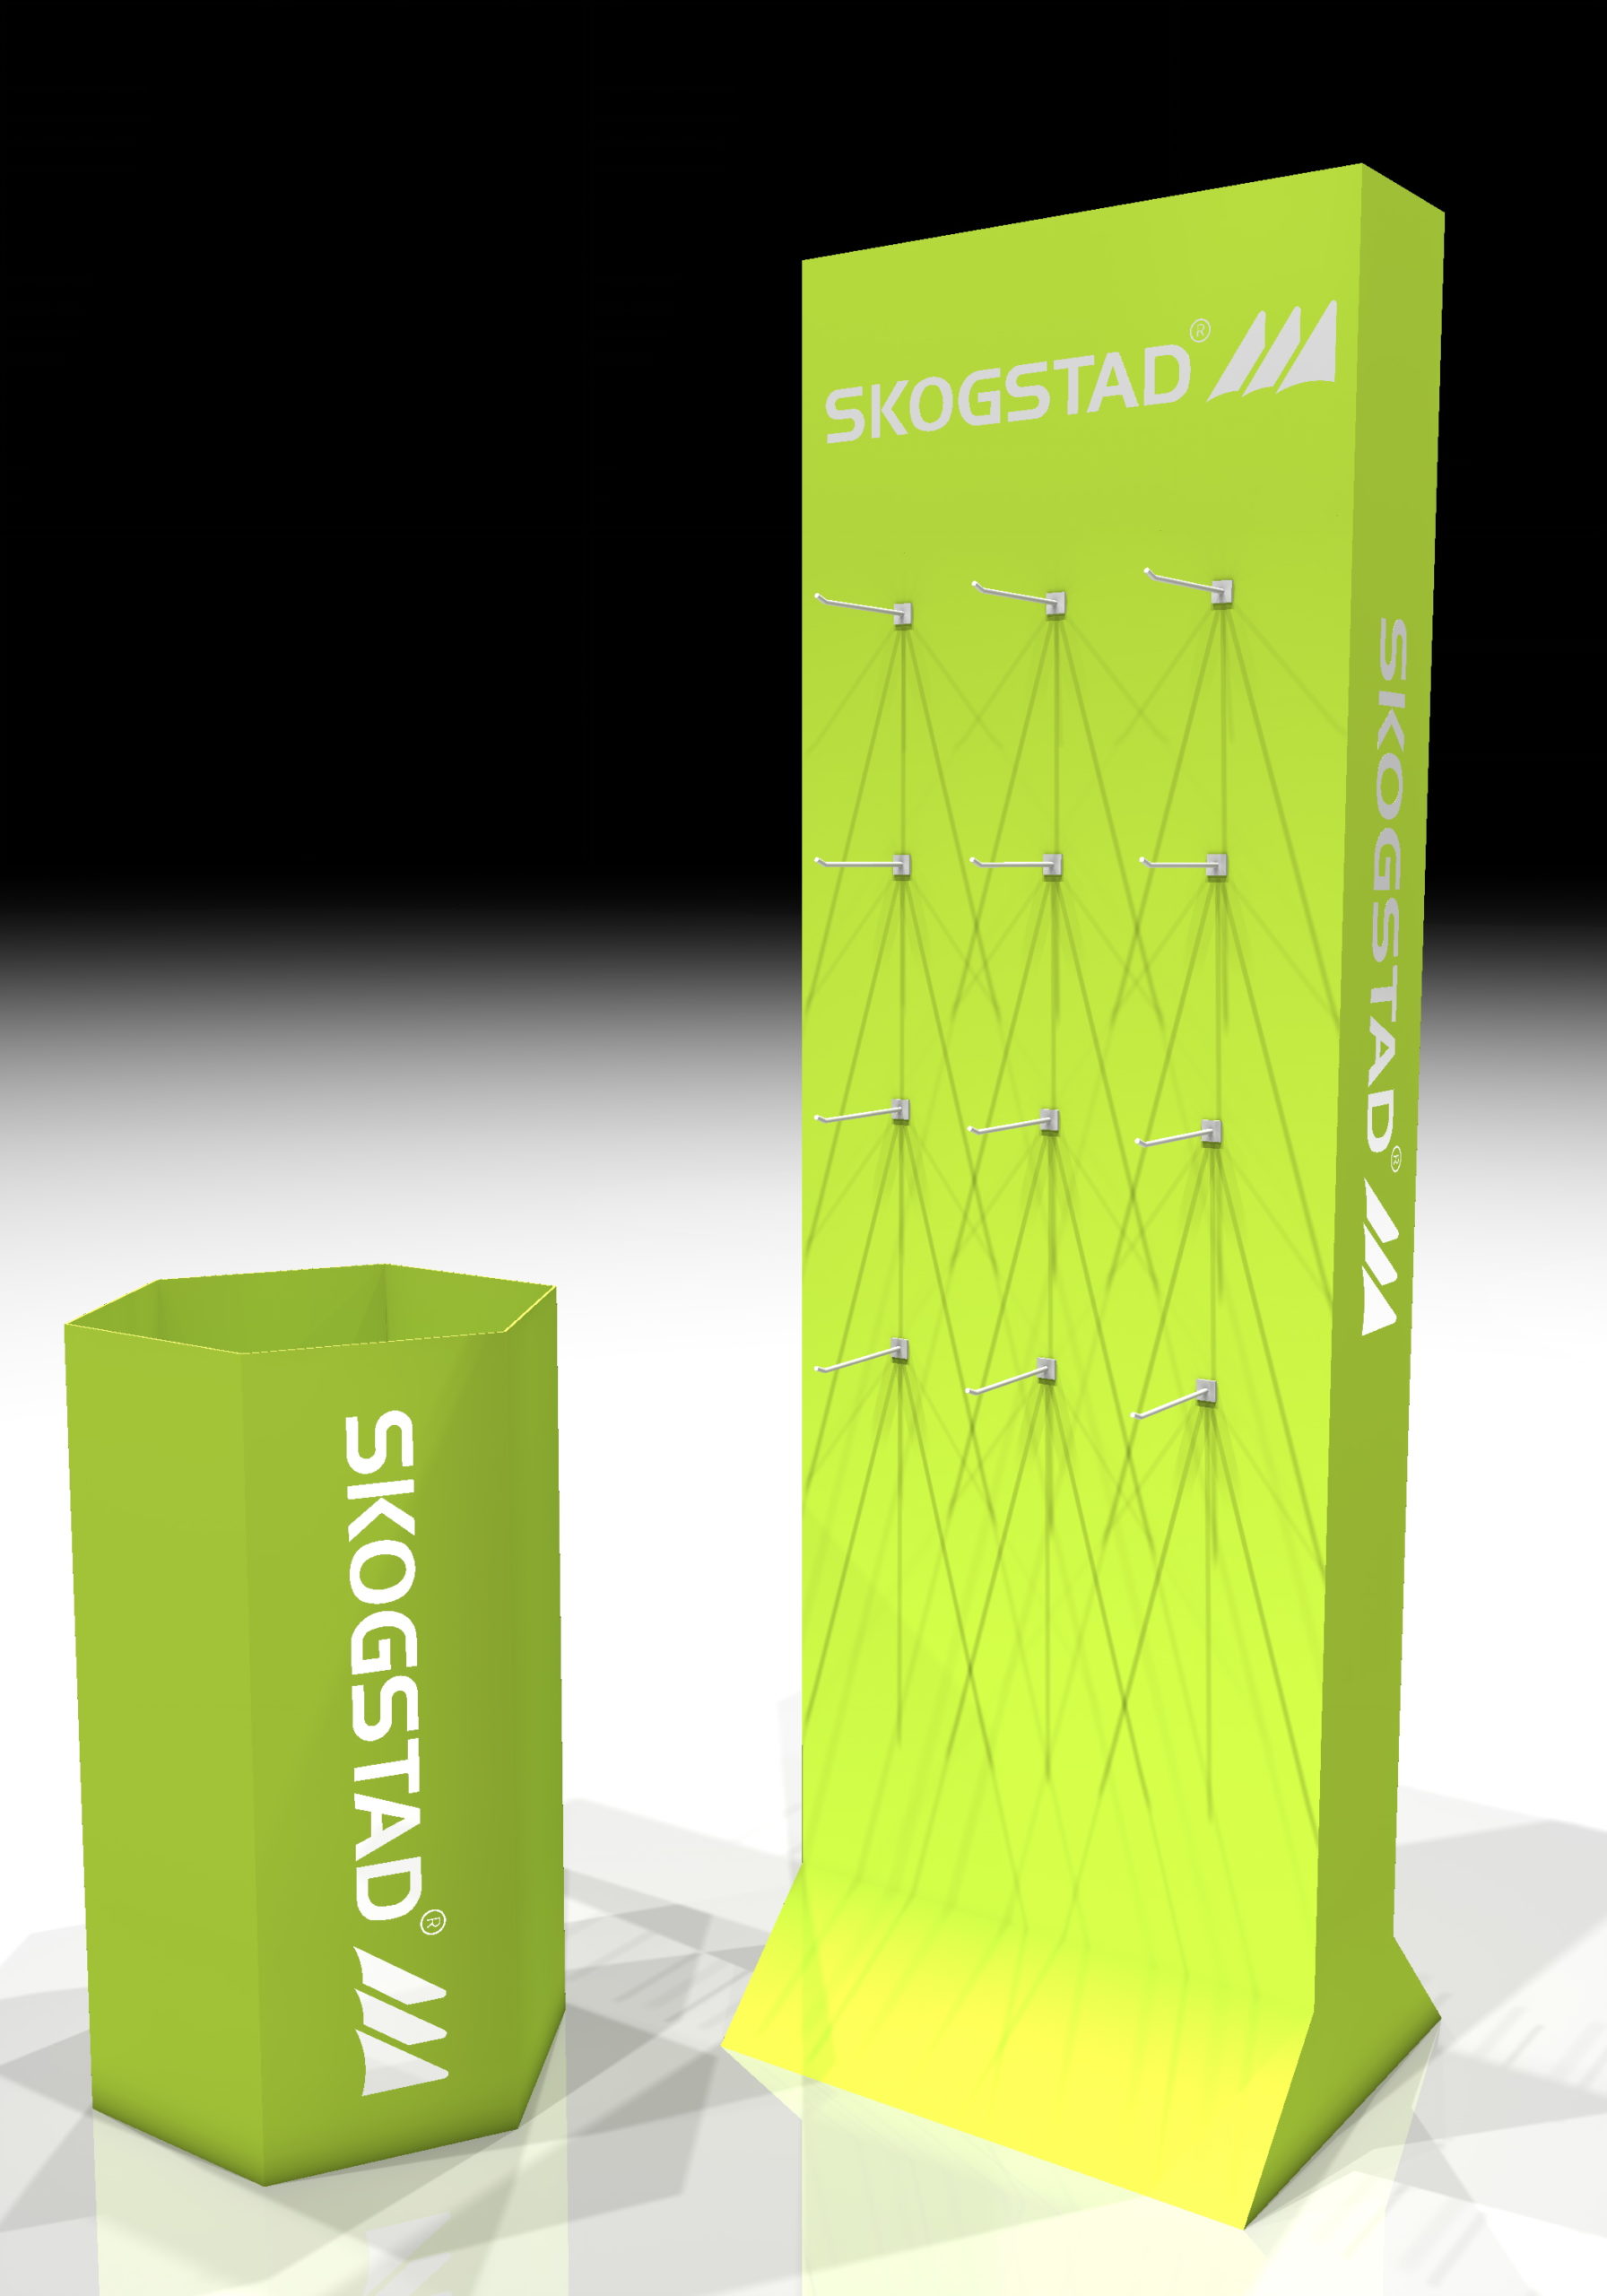 SKOGSTAD Cardboard Displays (2013.04.23)